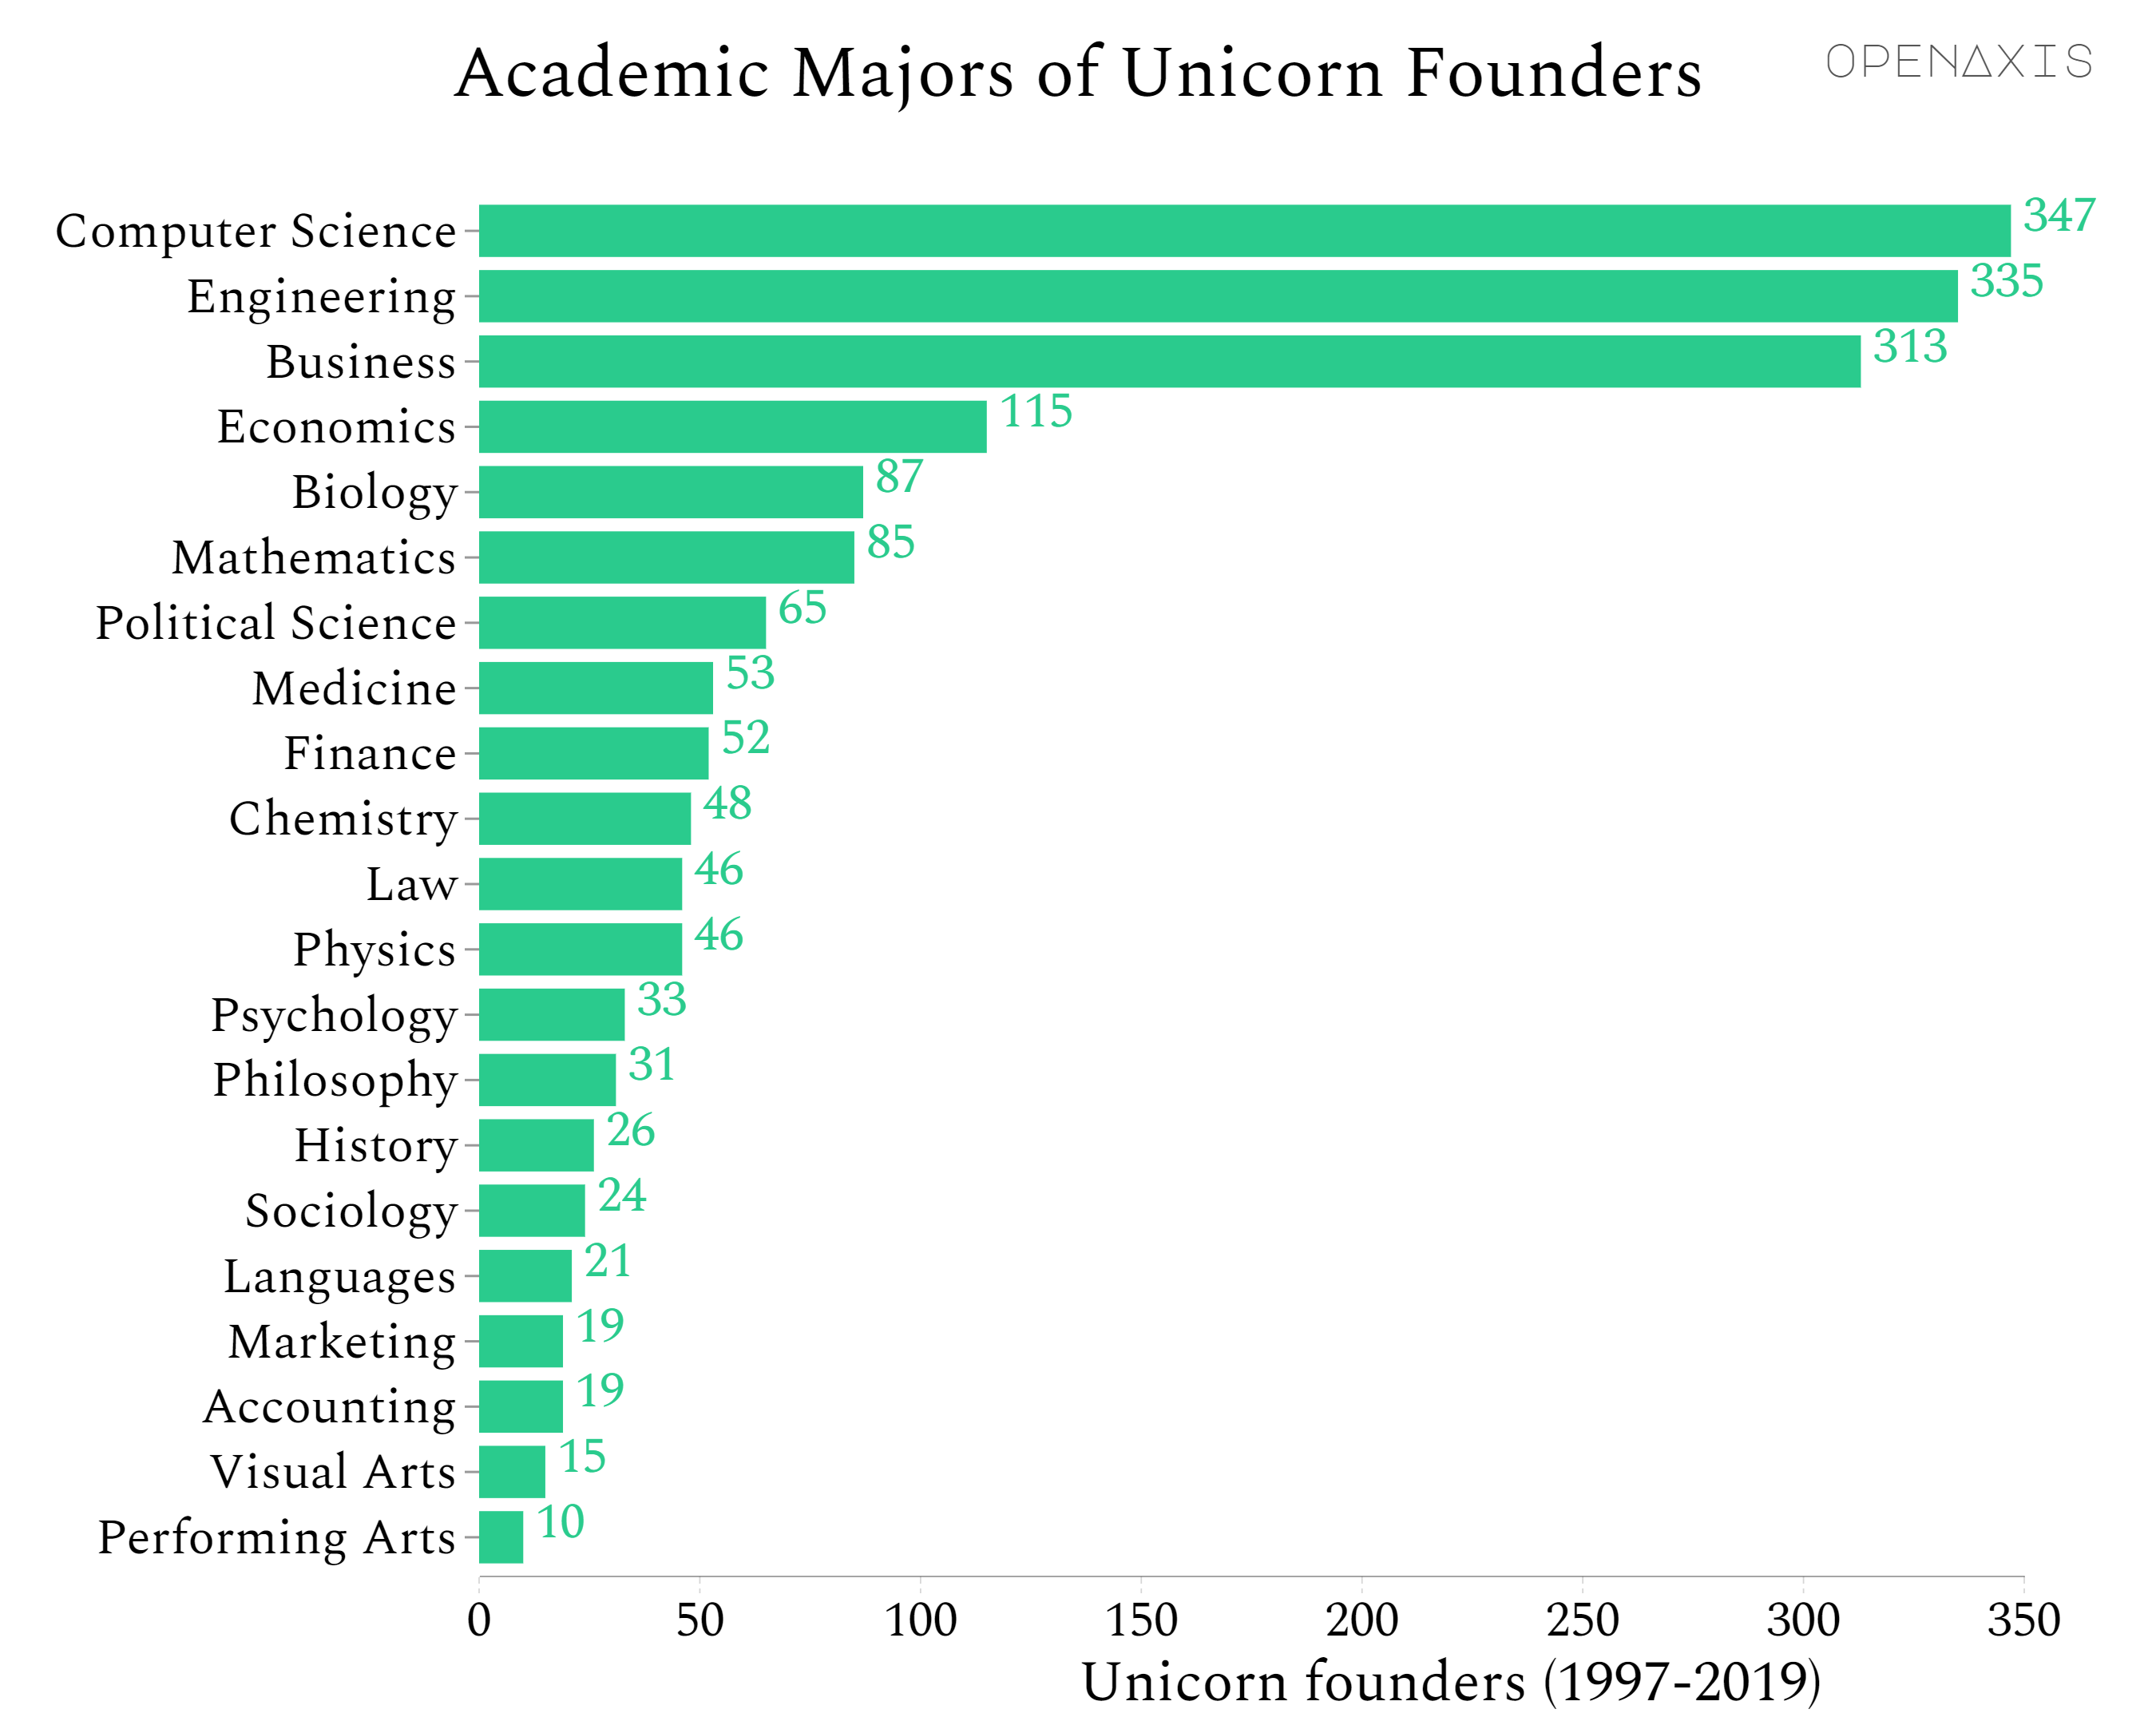 "Academic Majors of Unicorn Founders"